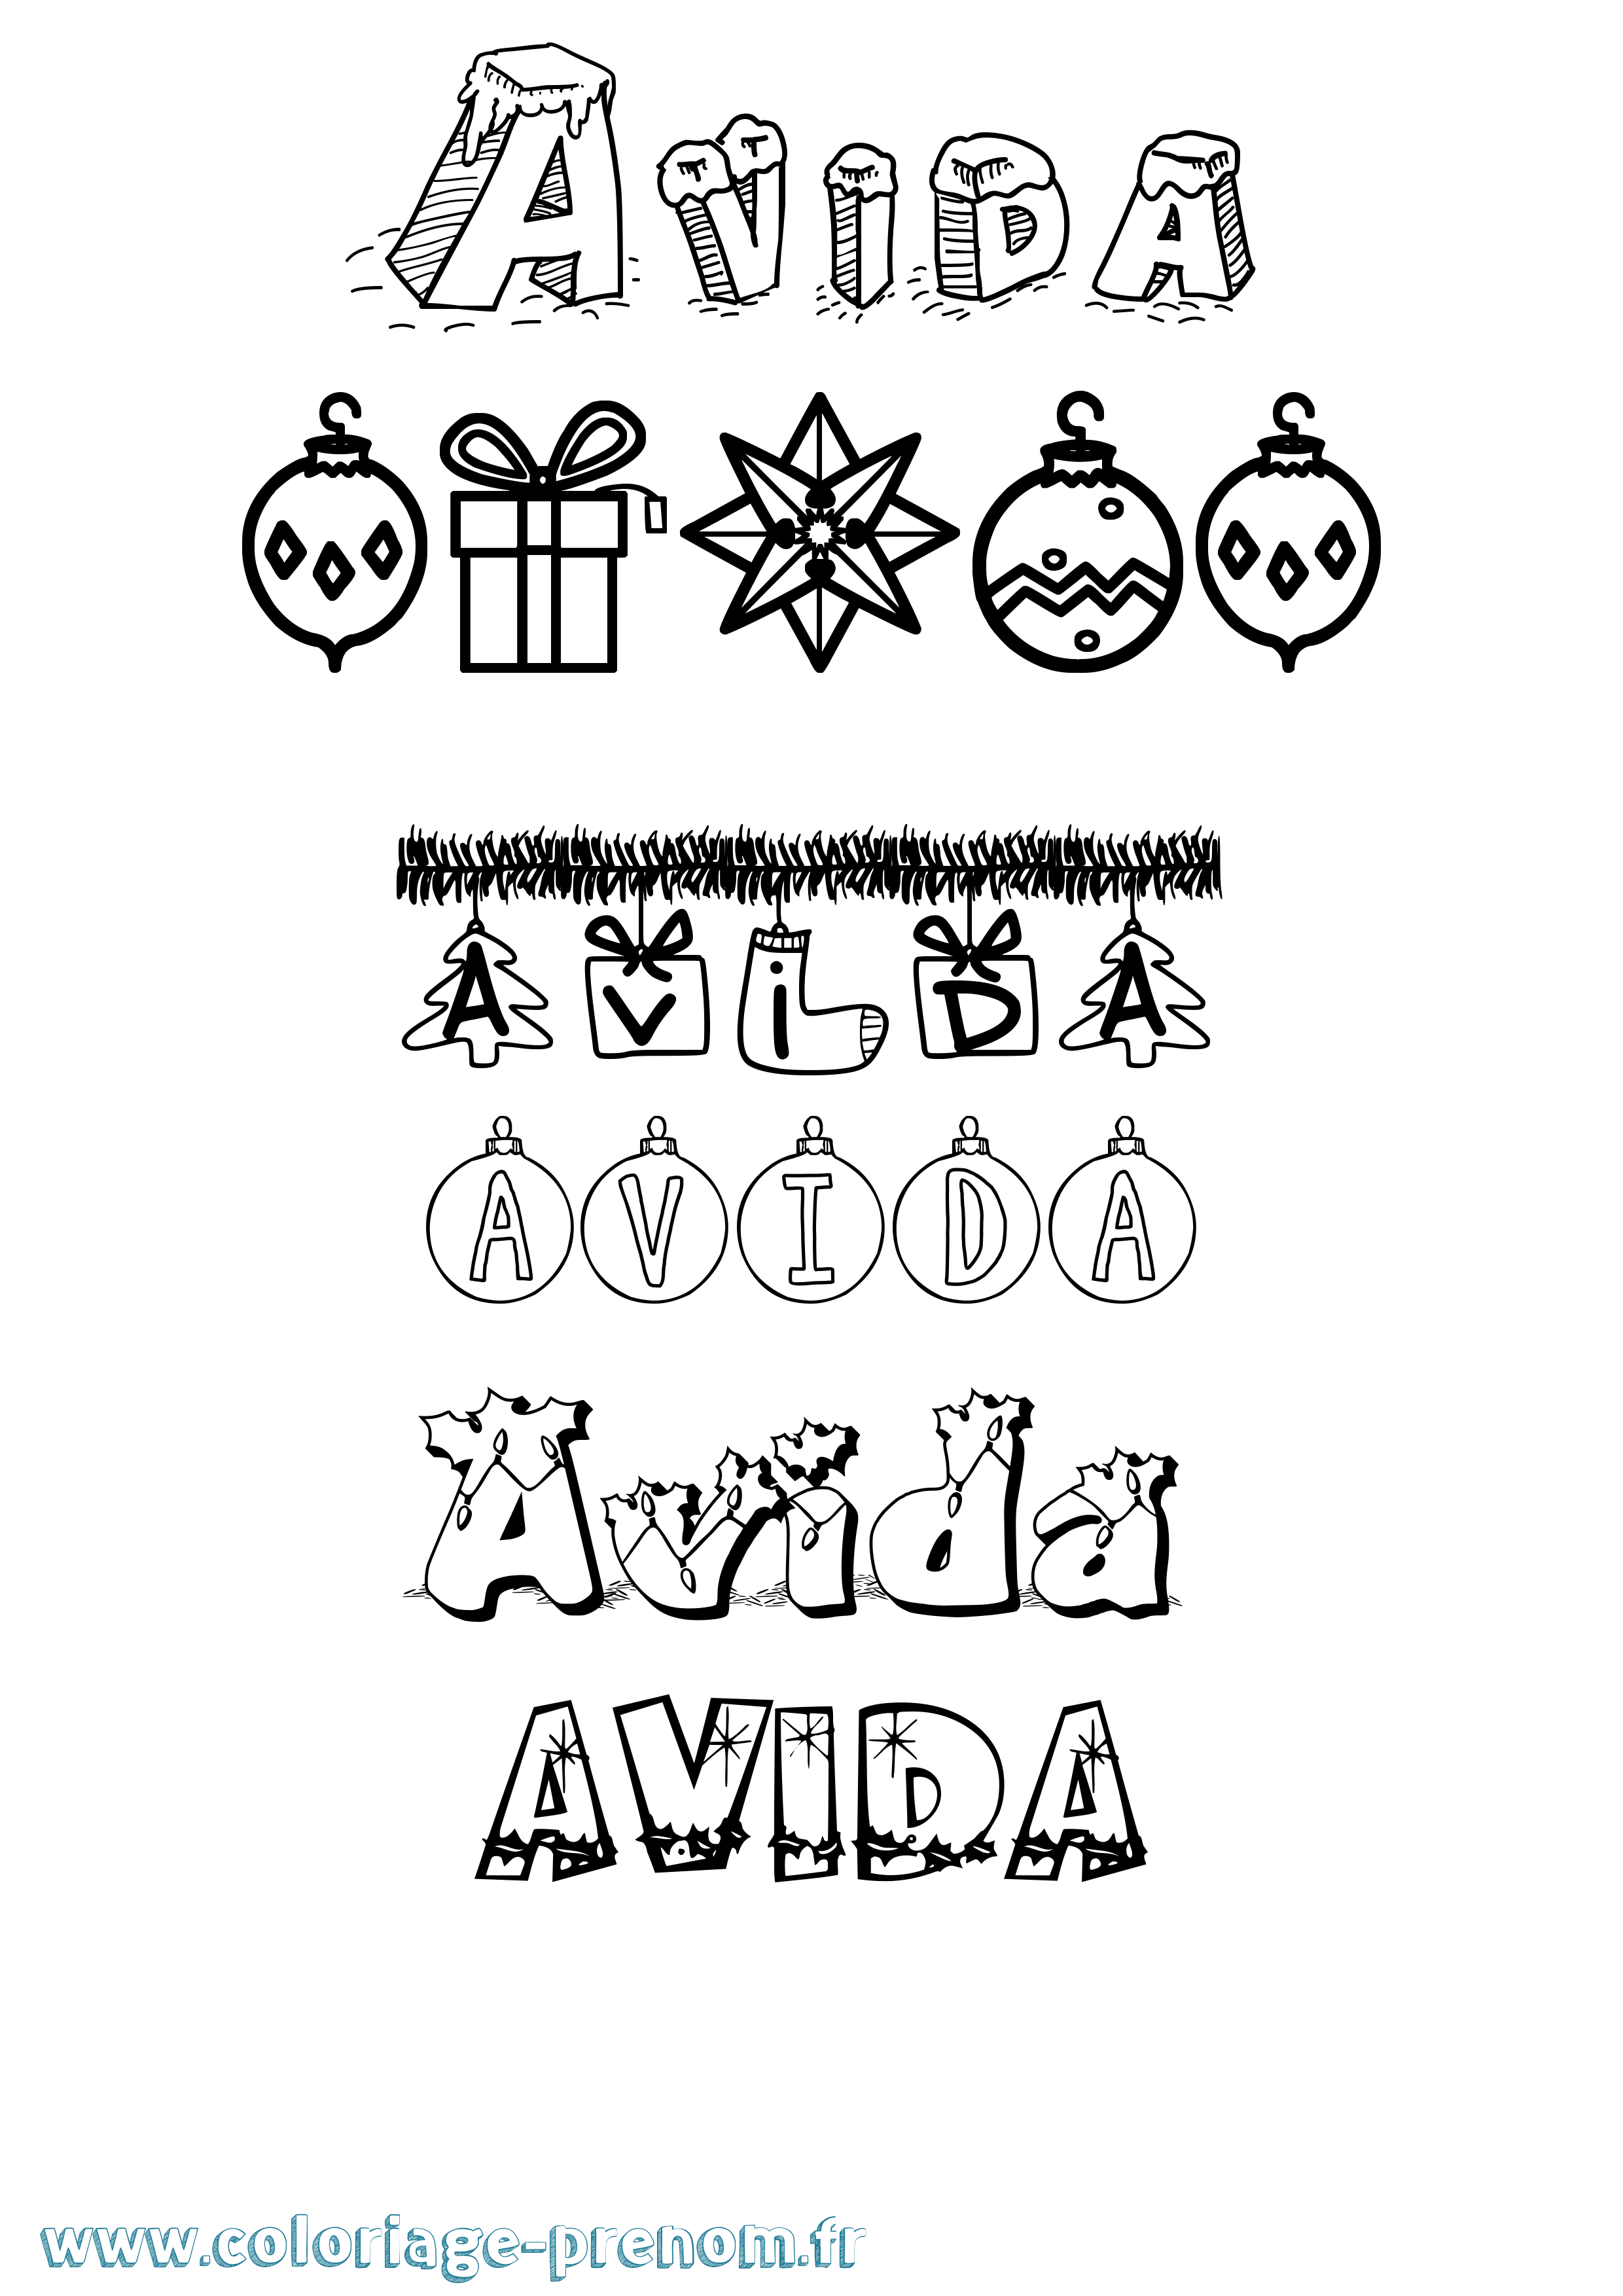 Coloriage prénom Avida Noël